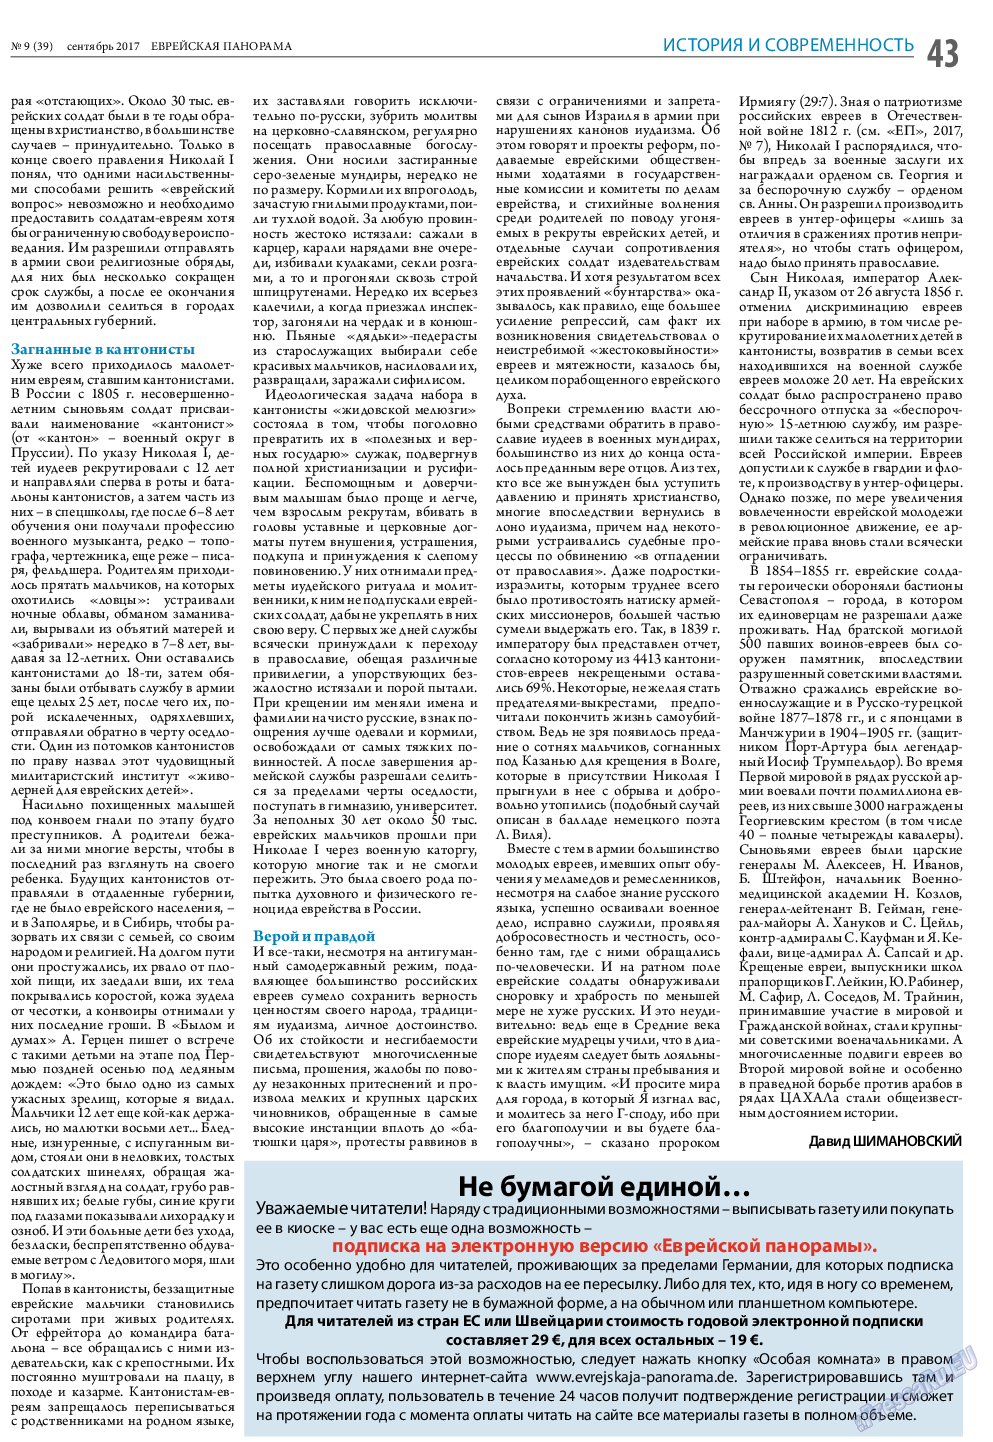 Еврейская панорама, газета. 2017 №9 стр.43